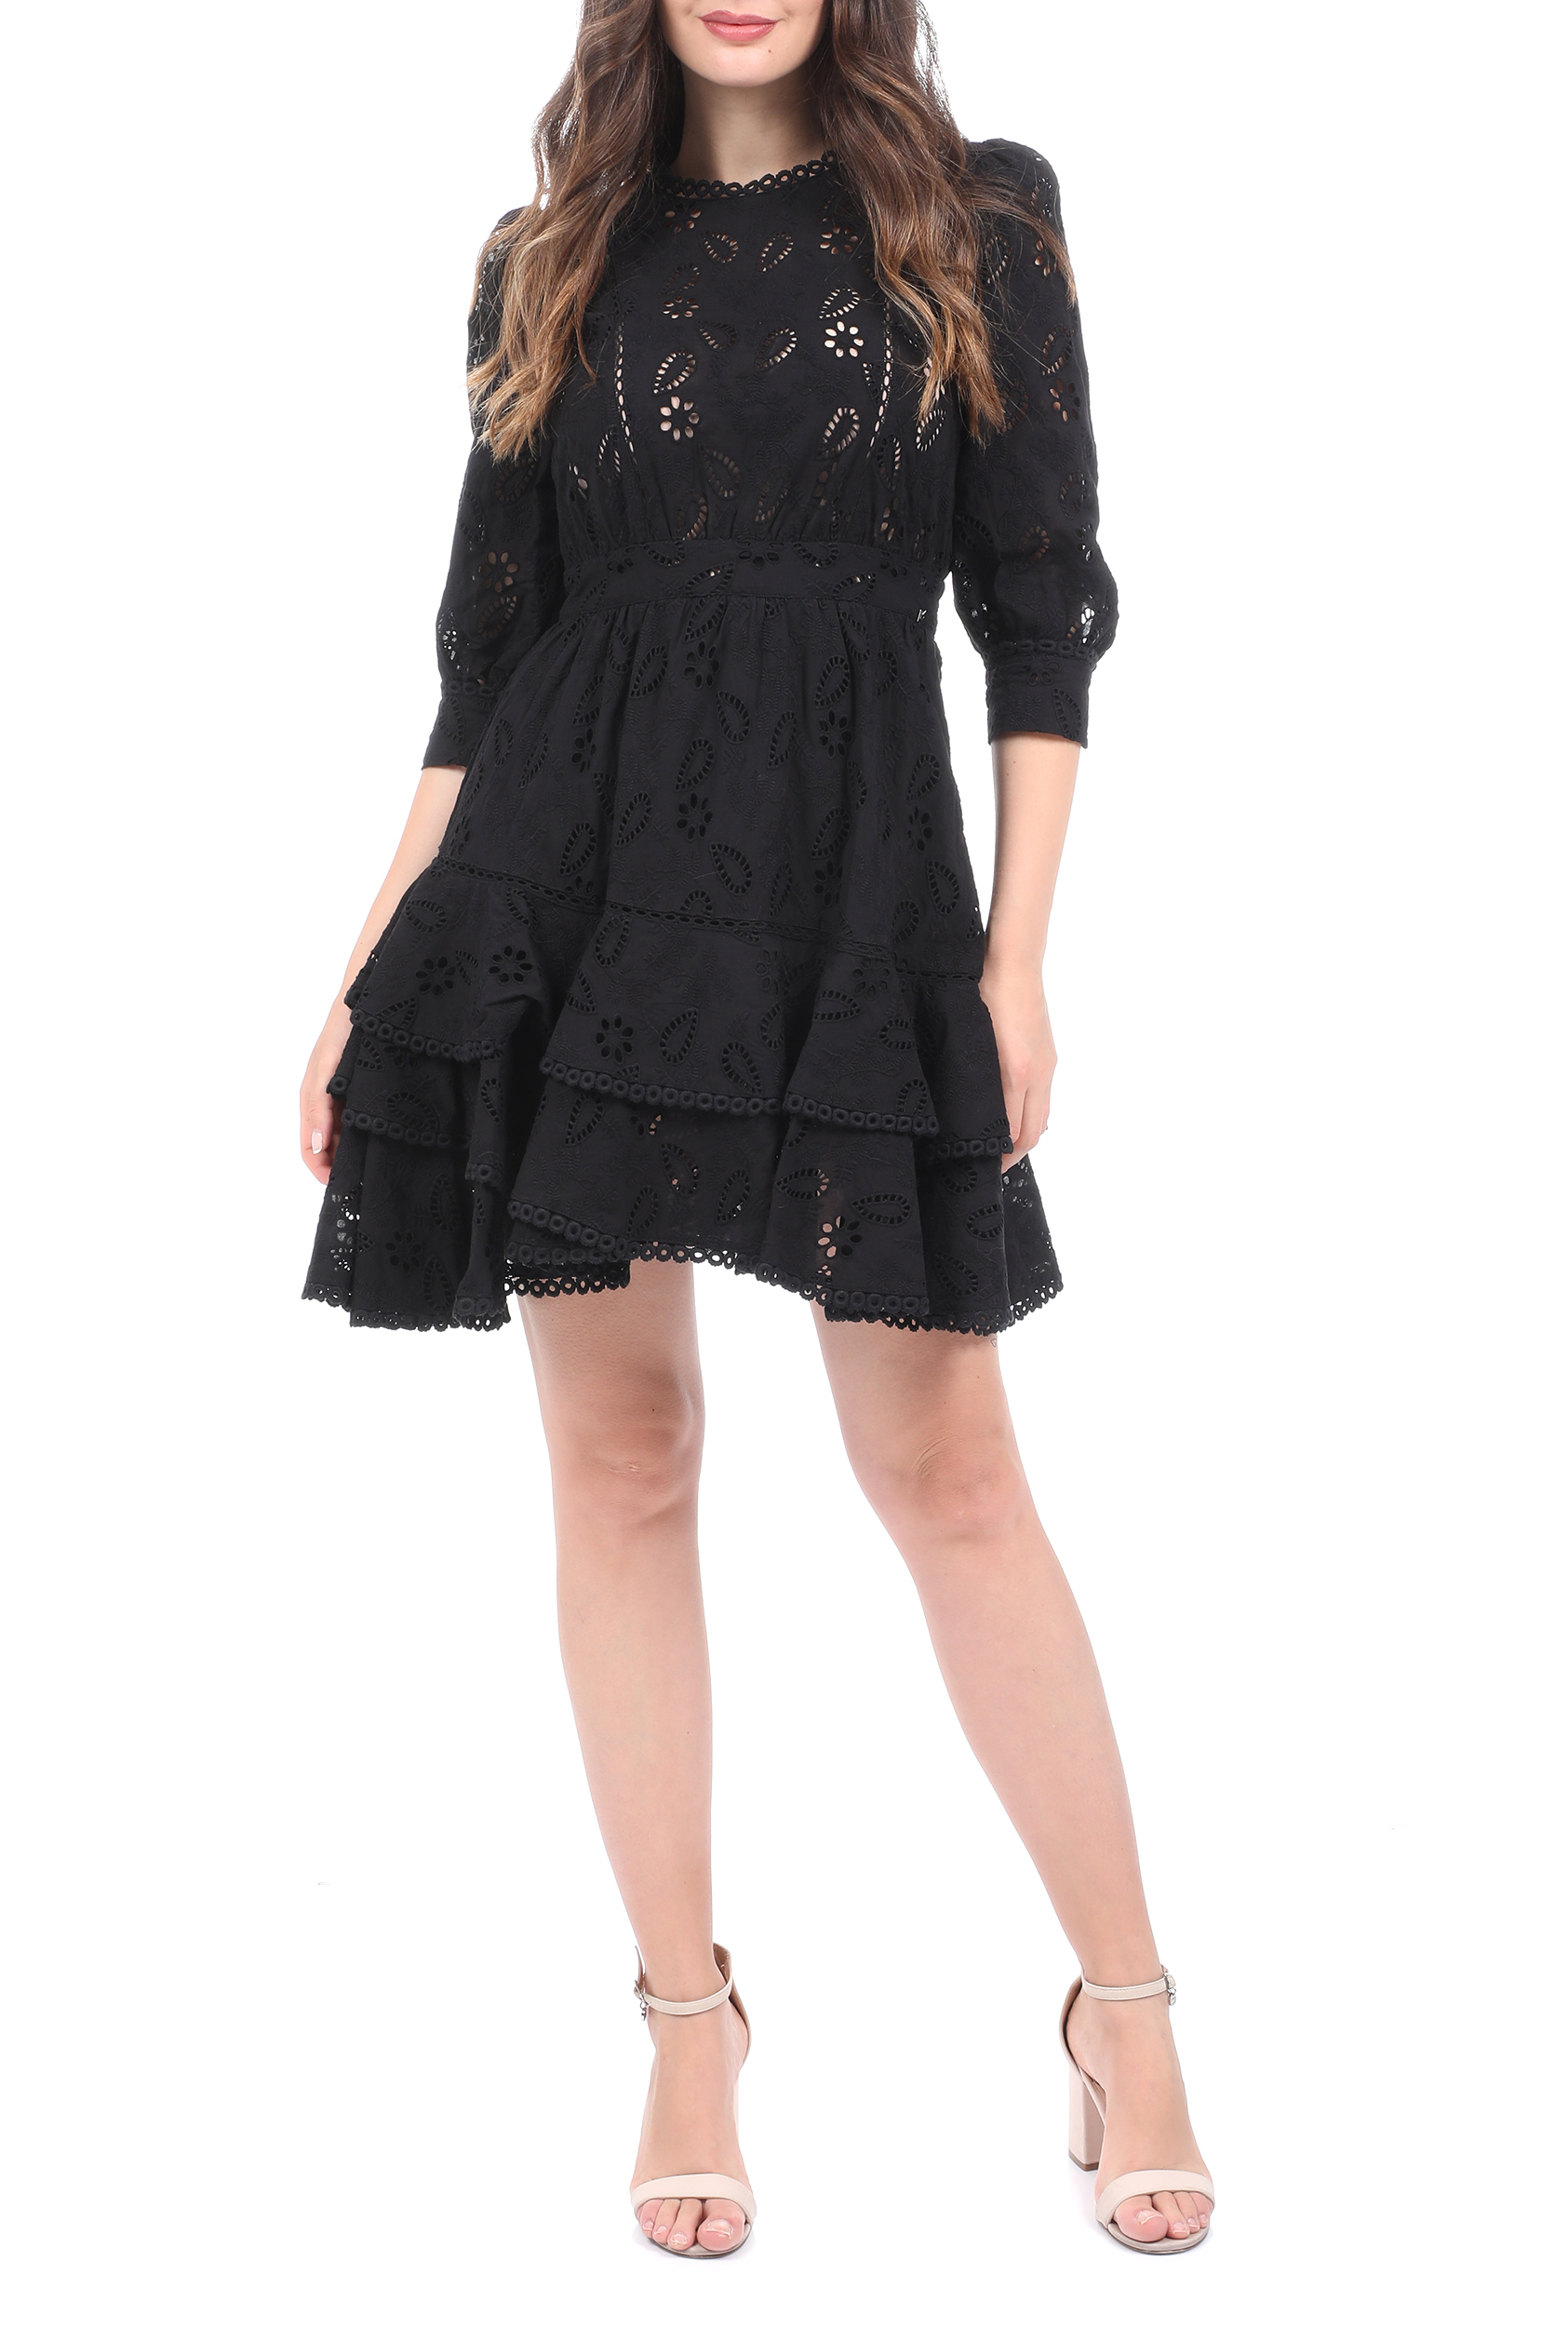 KOCCA – Γυνακειο mini φορεμα KOCCA TEJAL μαυρο